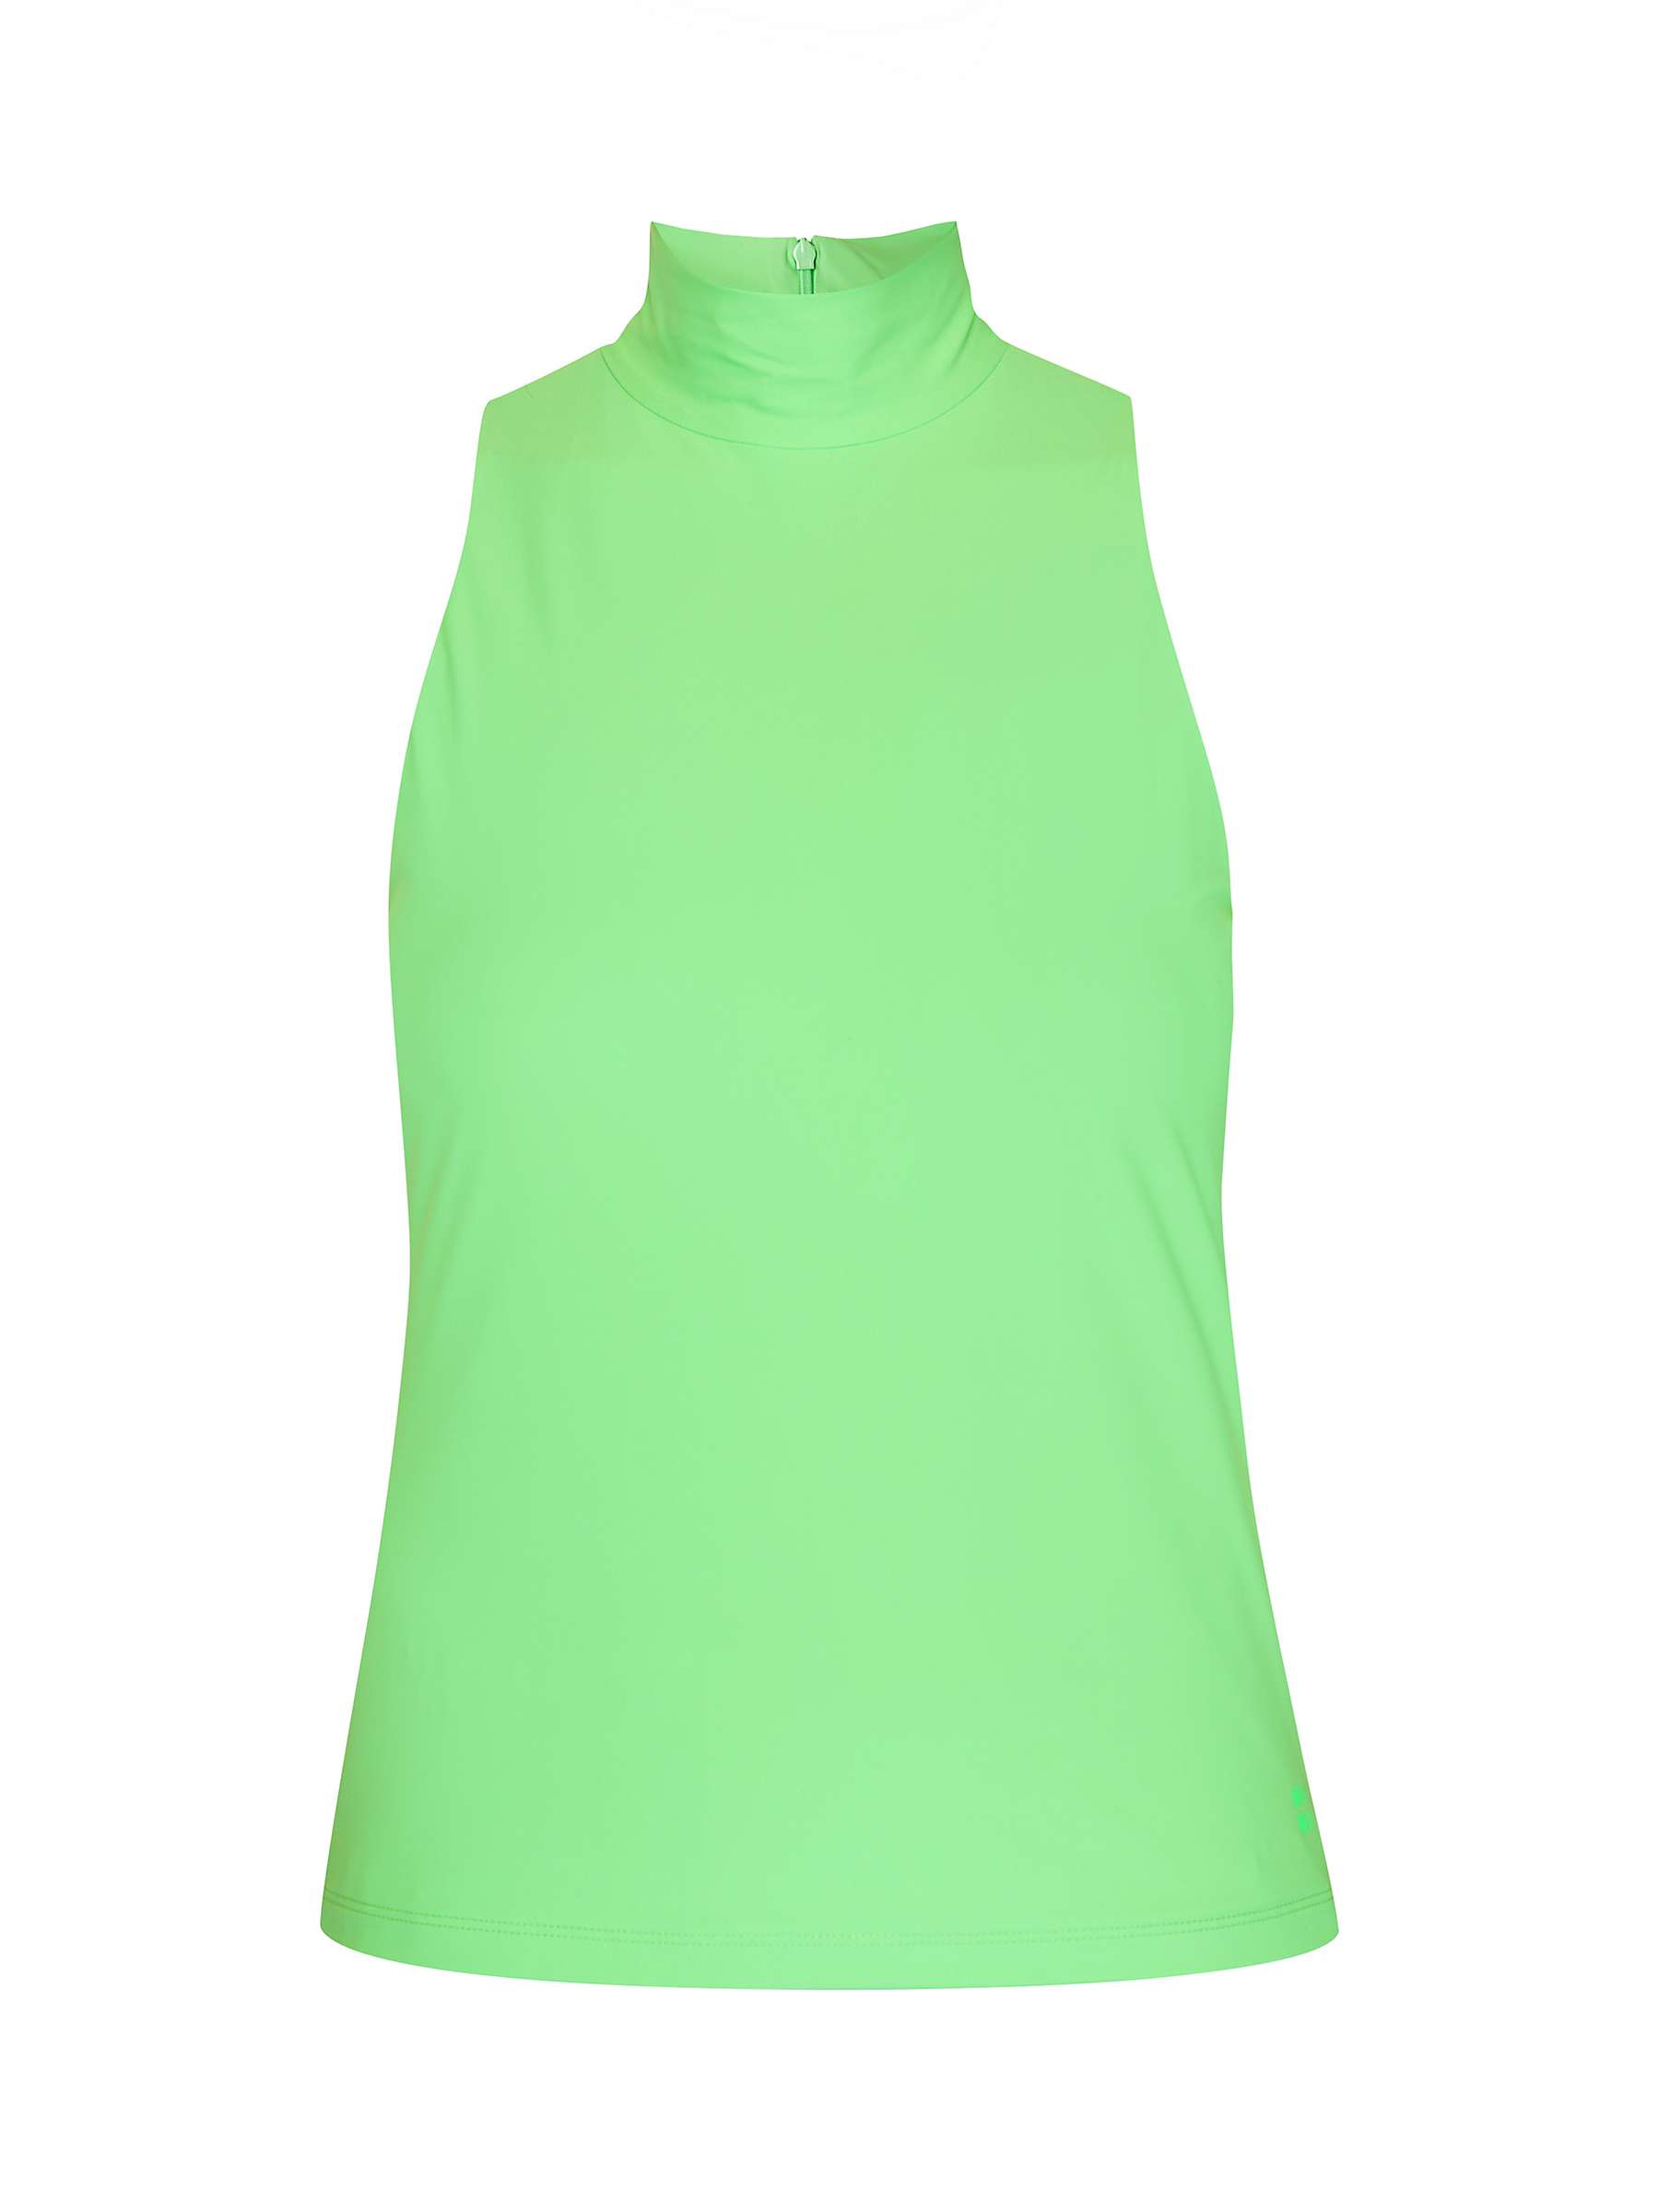 Buy Sweaty Betty Explorer High Neck Sleeveless Top, Zest Green Online at johnlewis.com